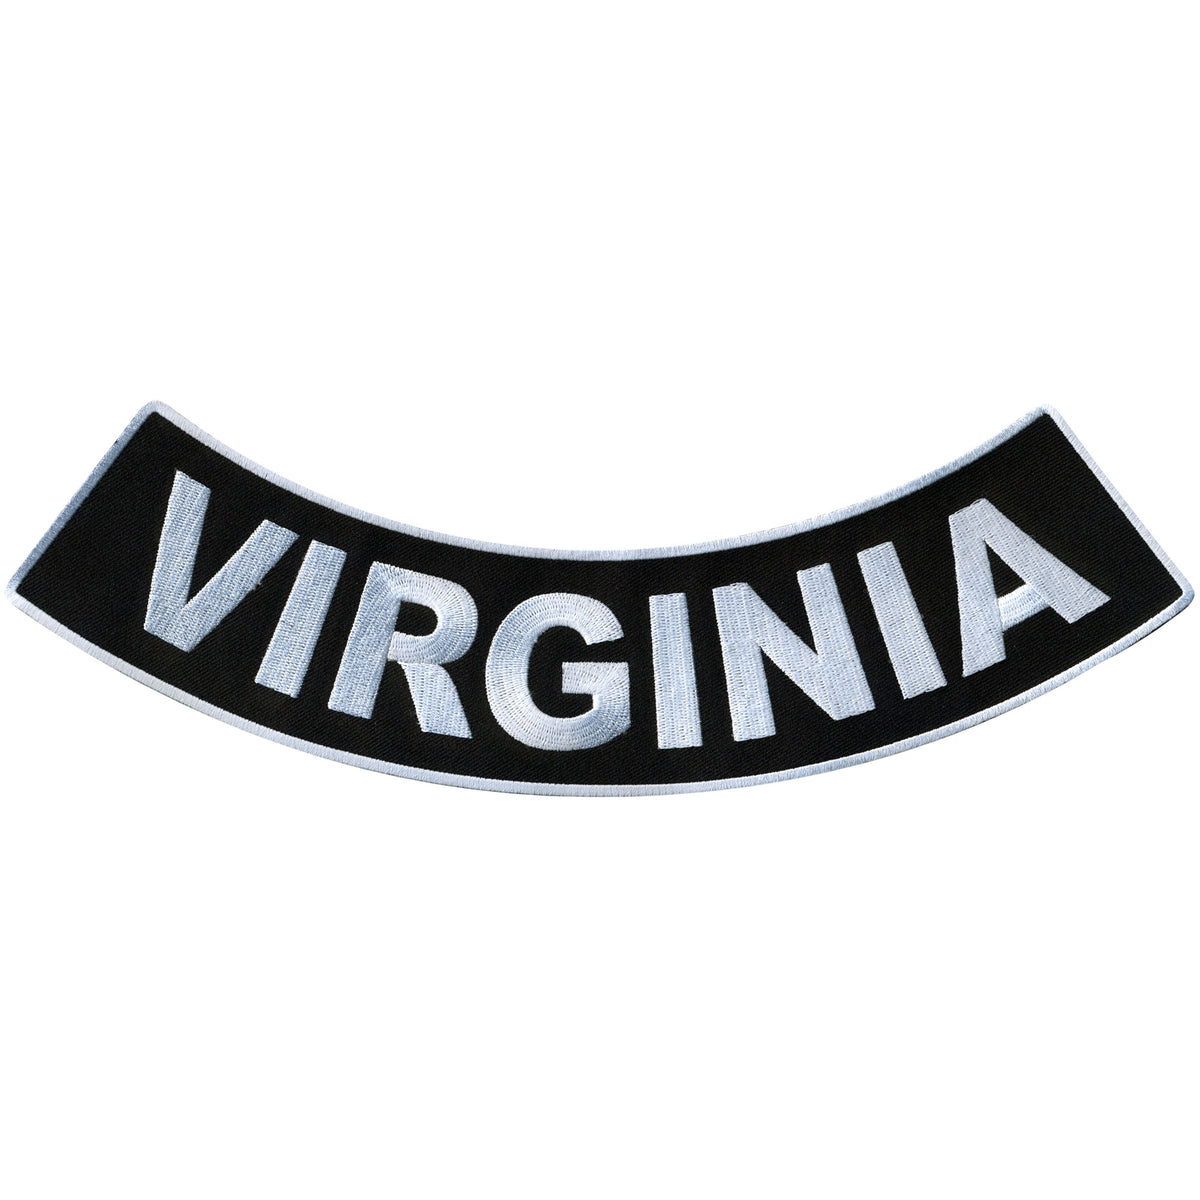 Hot Leathers Virginia 12” X 3” Bottom Rocker Patch